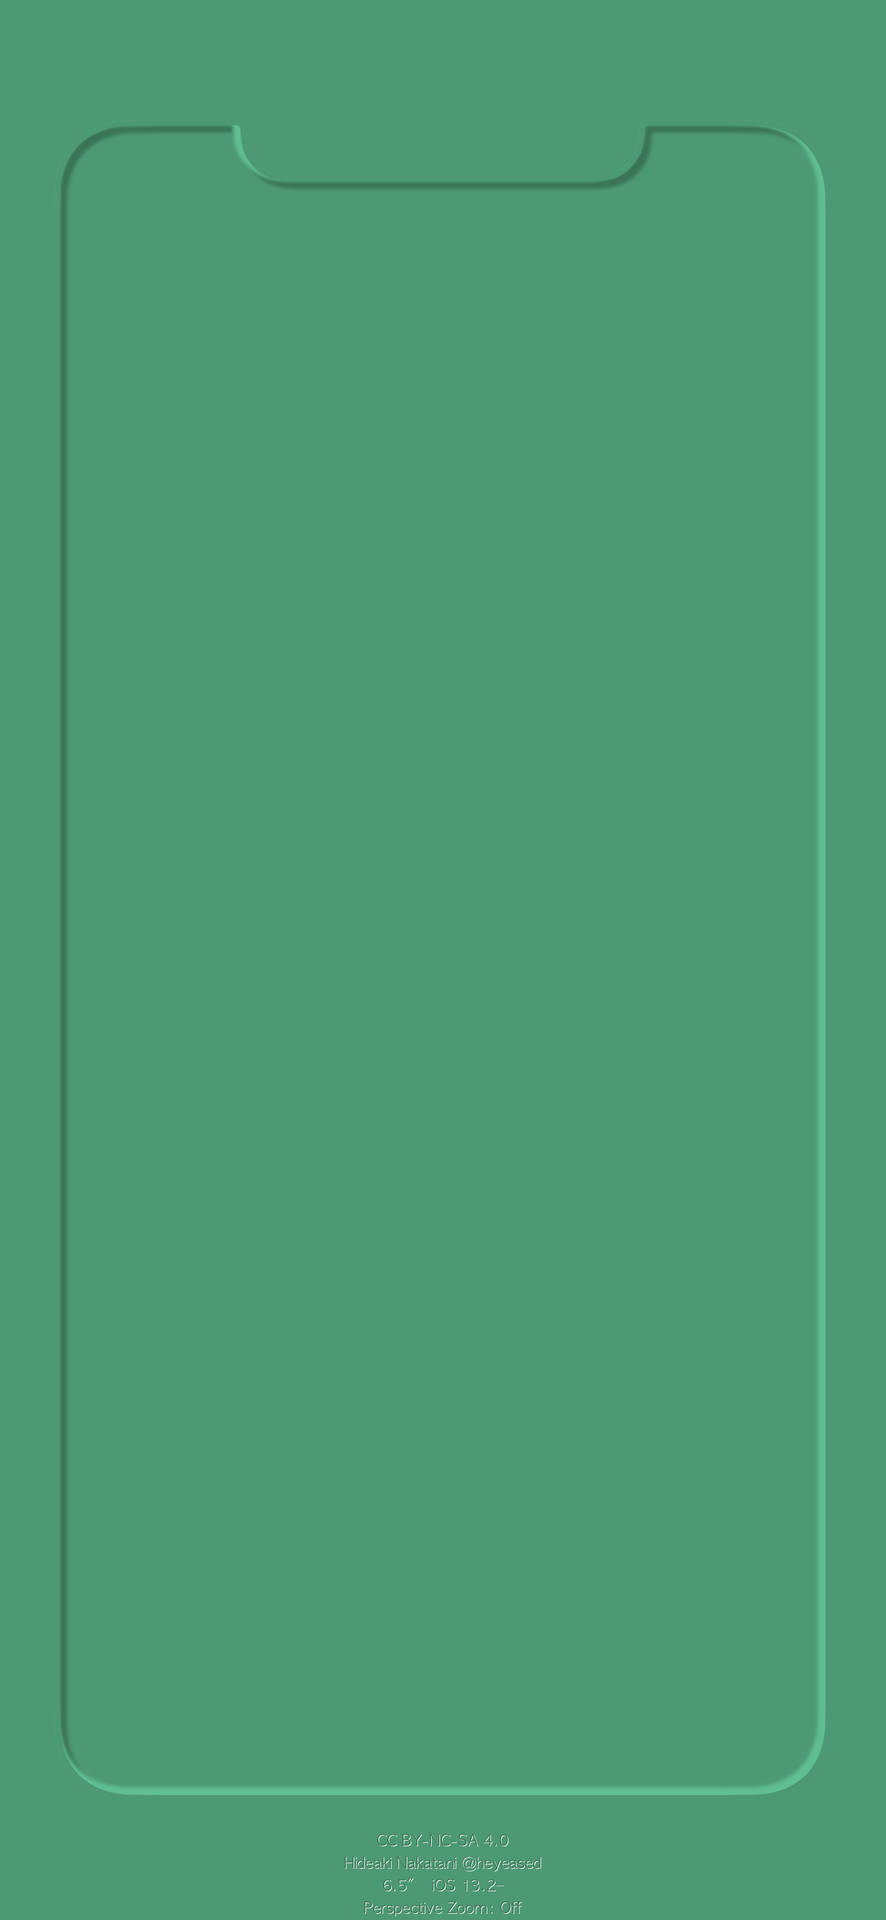 Outline 3d Green Display Iphone Wallpaper